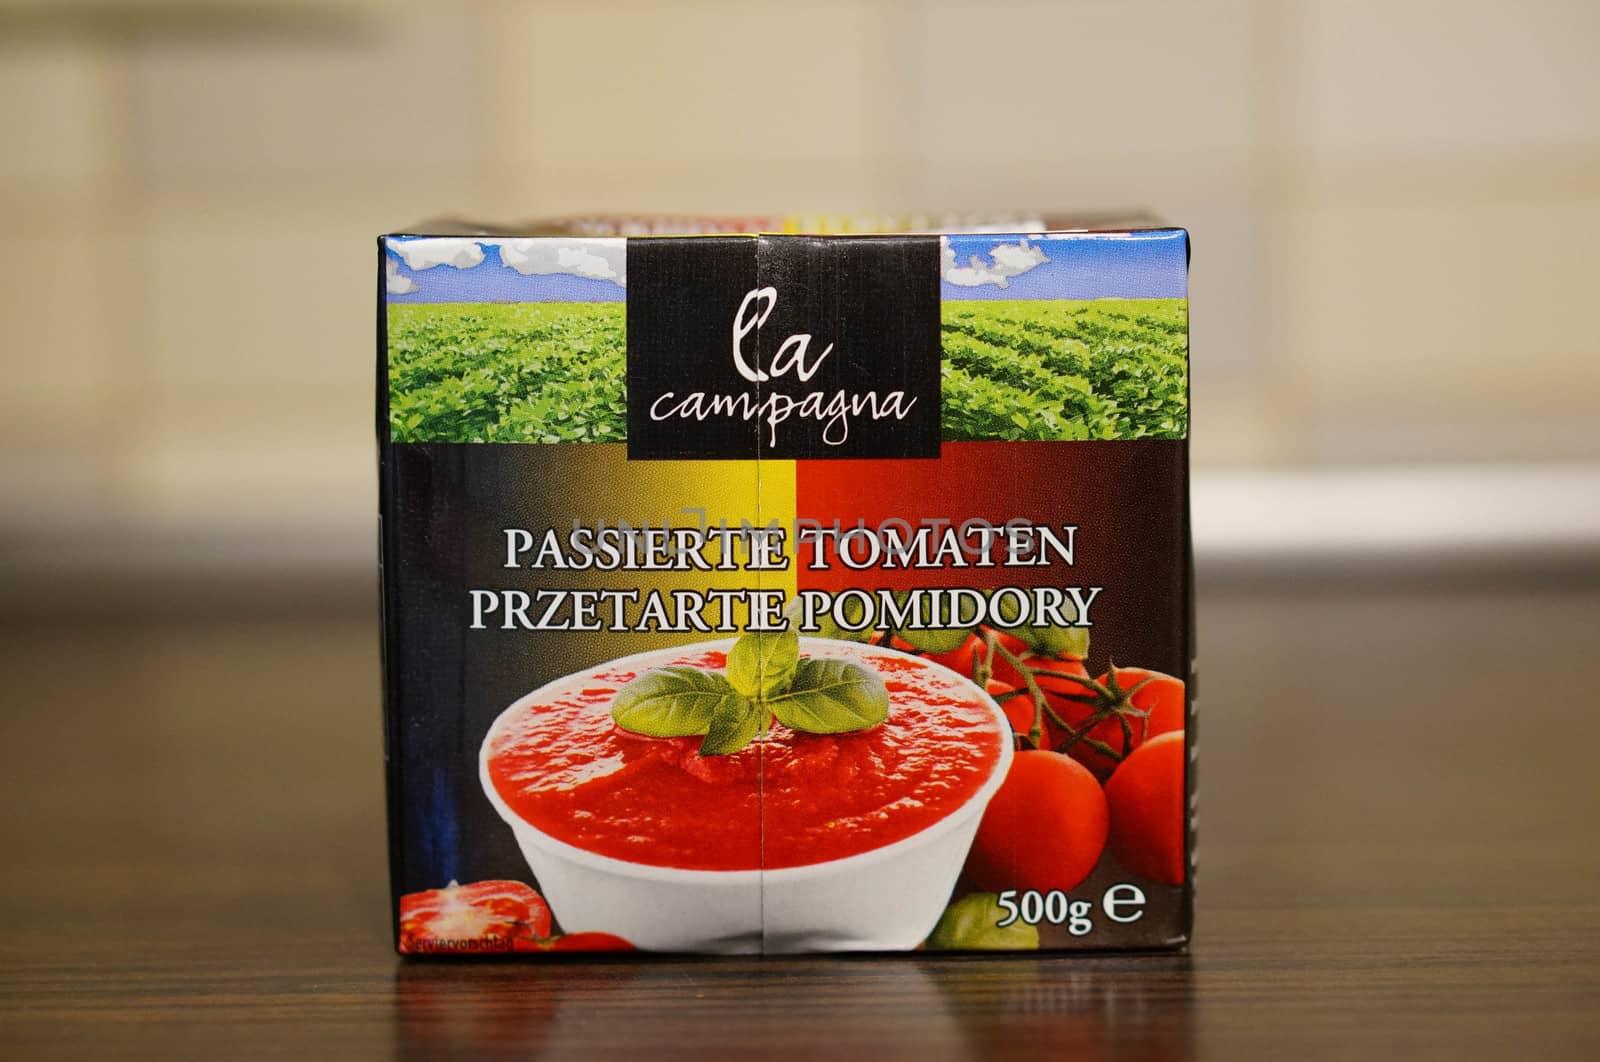 POZNAN, POLAND - SEPTEMBER 24, 2015: La Campagna blend tomato in a box